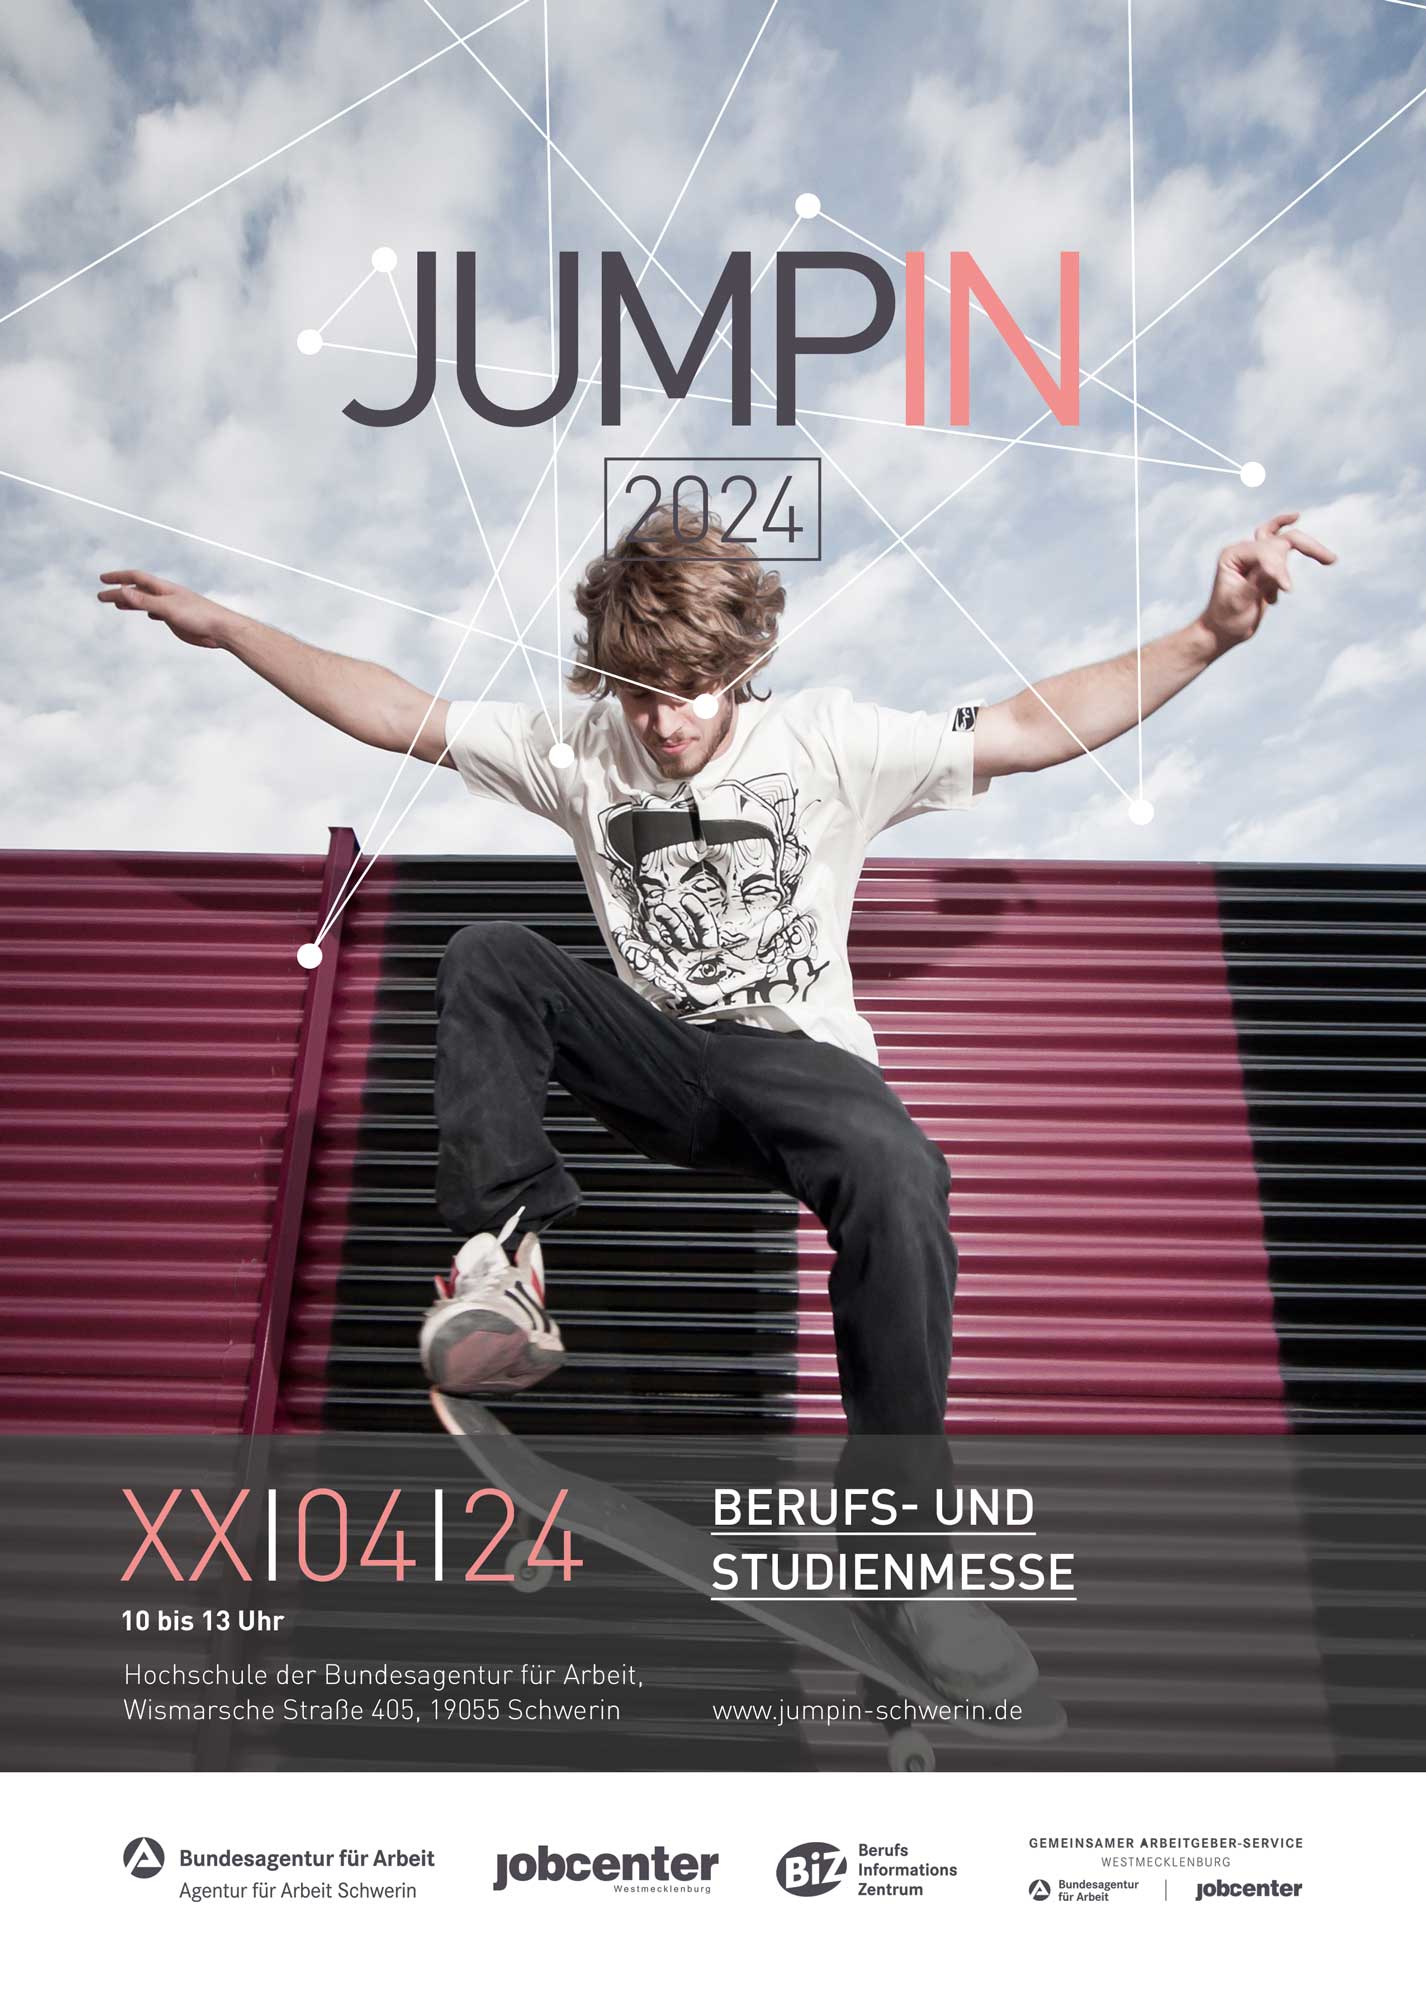 Jumpin Schwerin Berufsmesse 2022